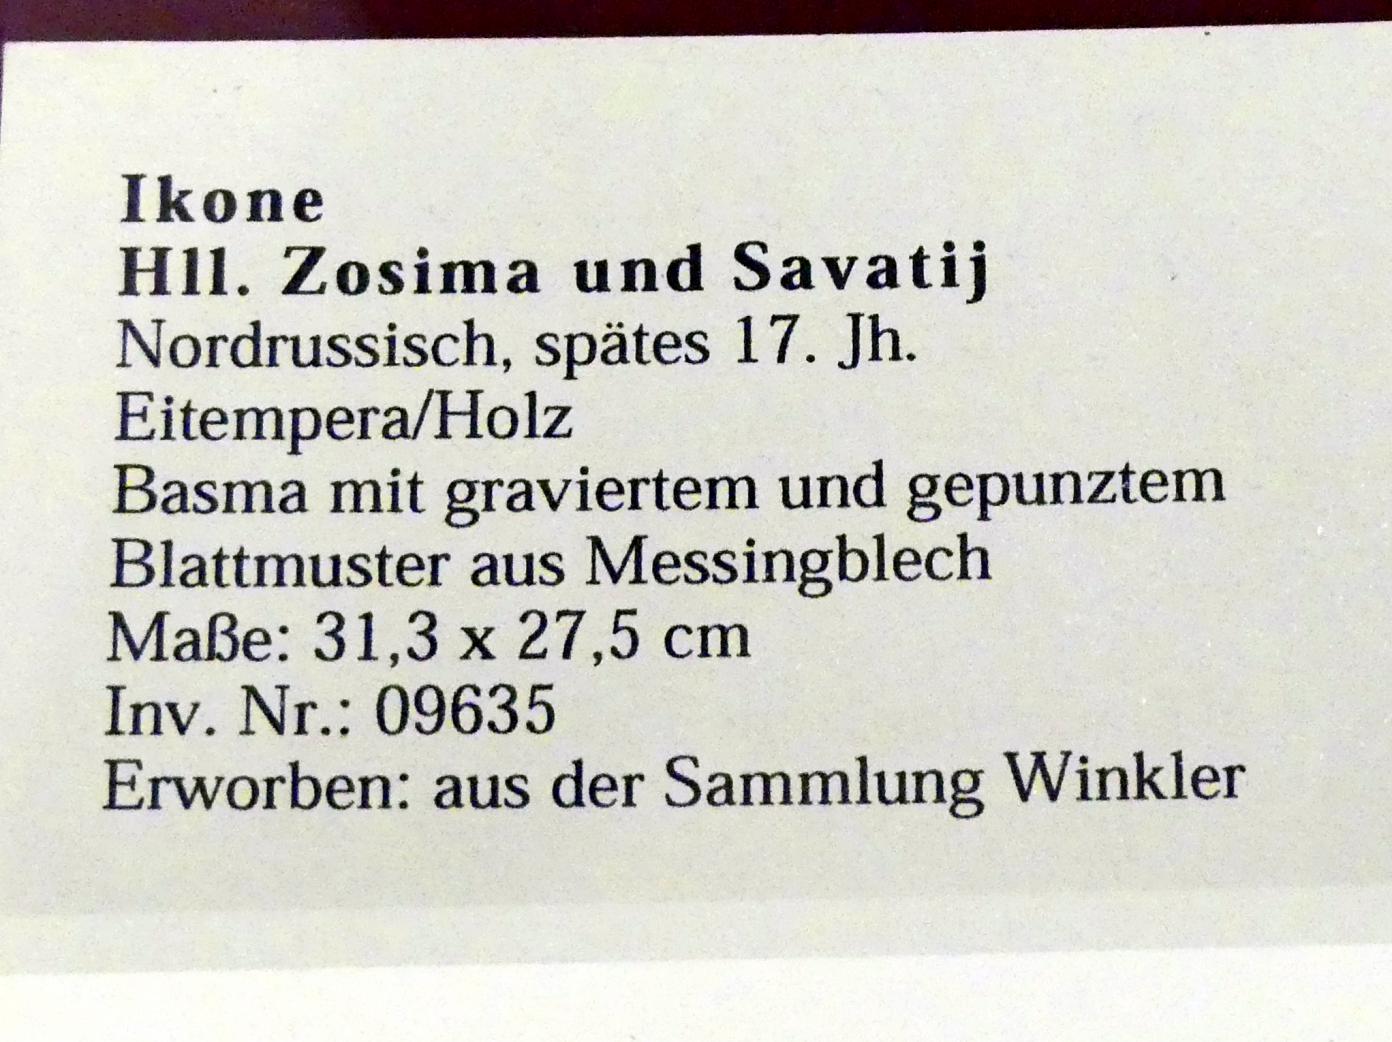 Heilige Zosima und Savatij, Frankfurt am Main, Ikonen-Museum, Obergeschoss, Ende 17. Jhd., Bild 2/2